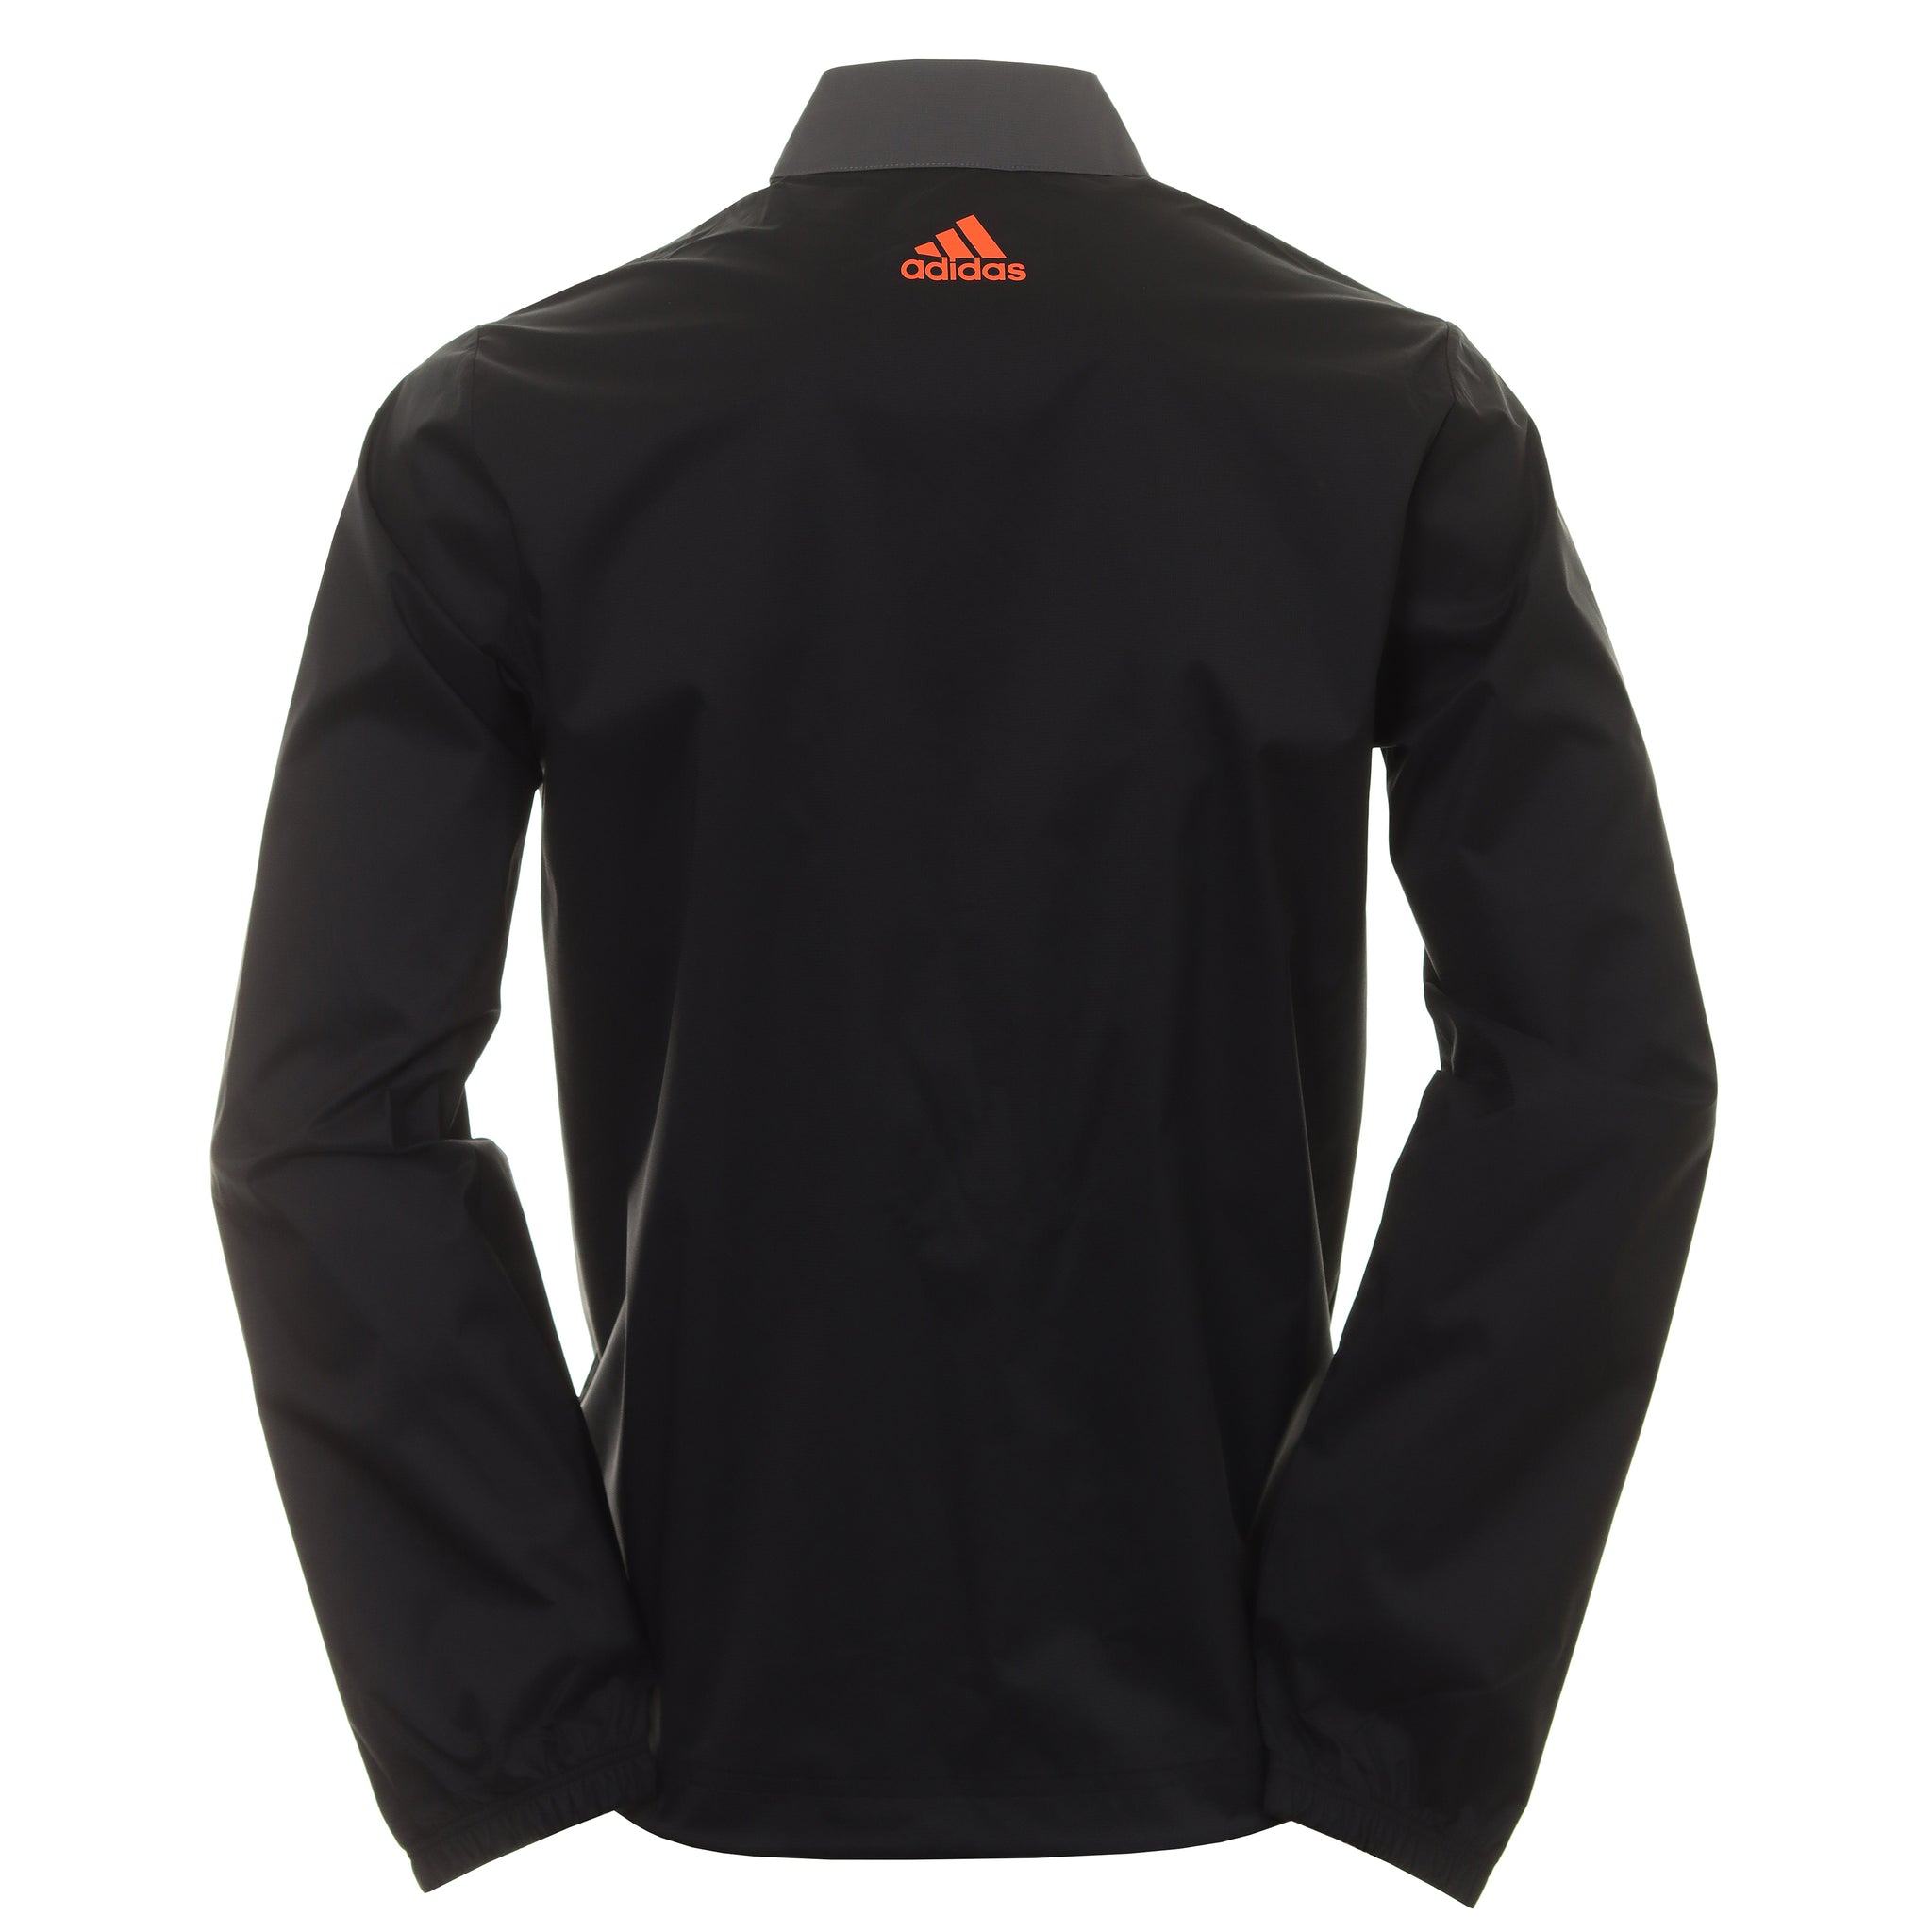 adidas-golf-provisional-jacket-hf9187-black